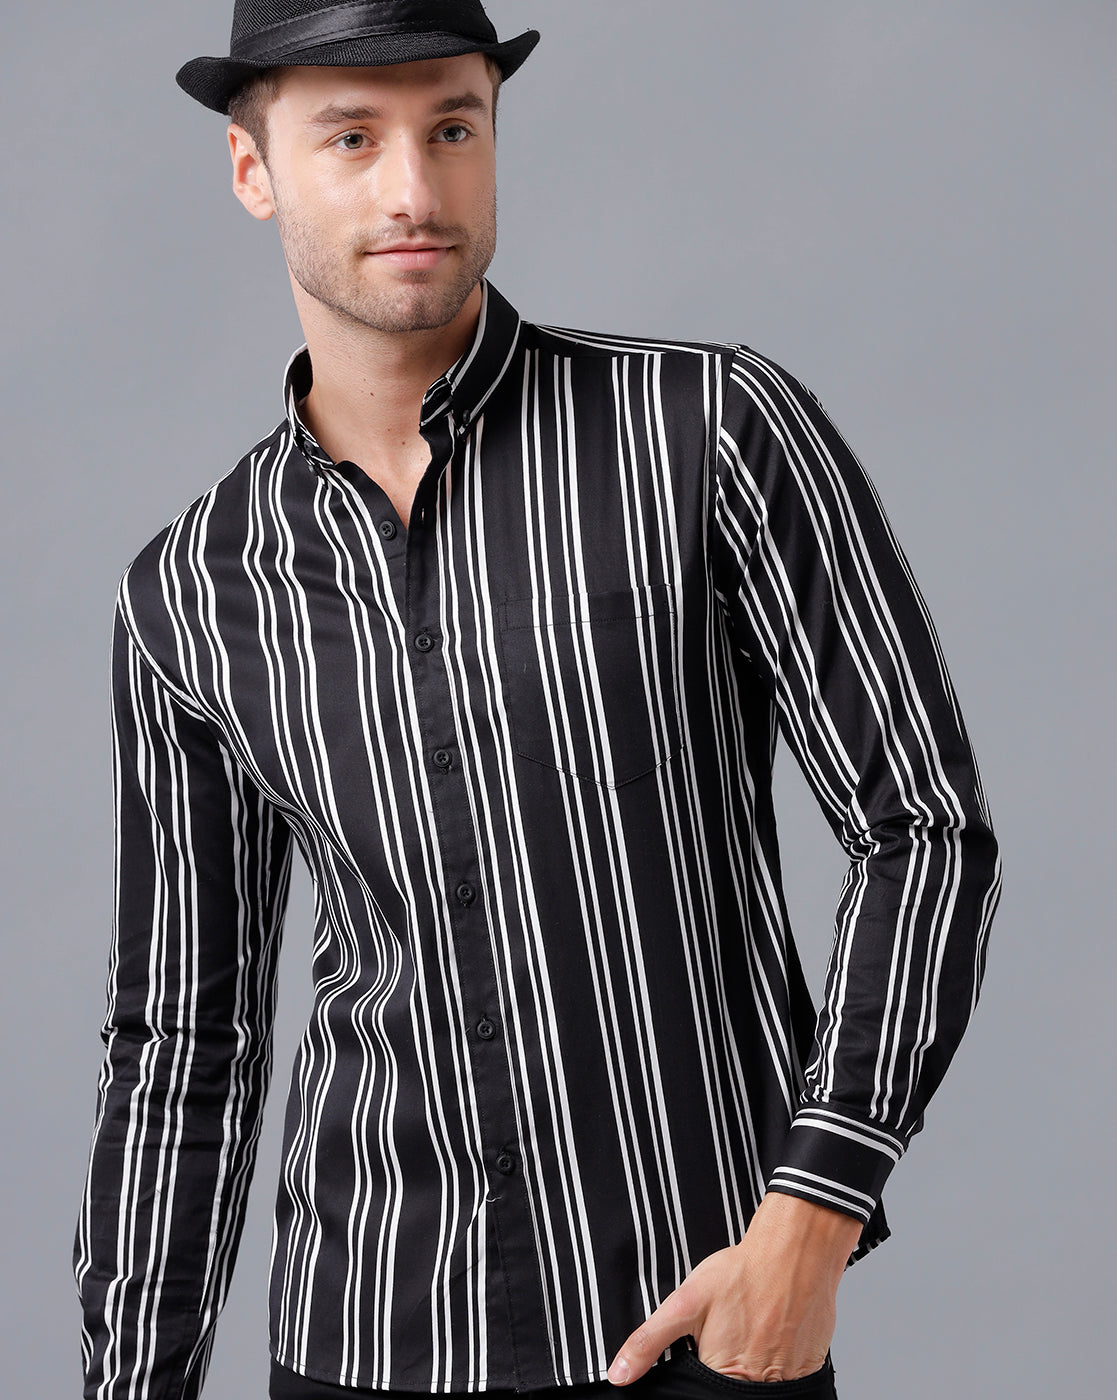 Black and white striped shirt mens